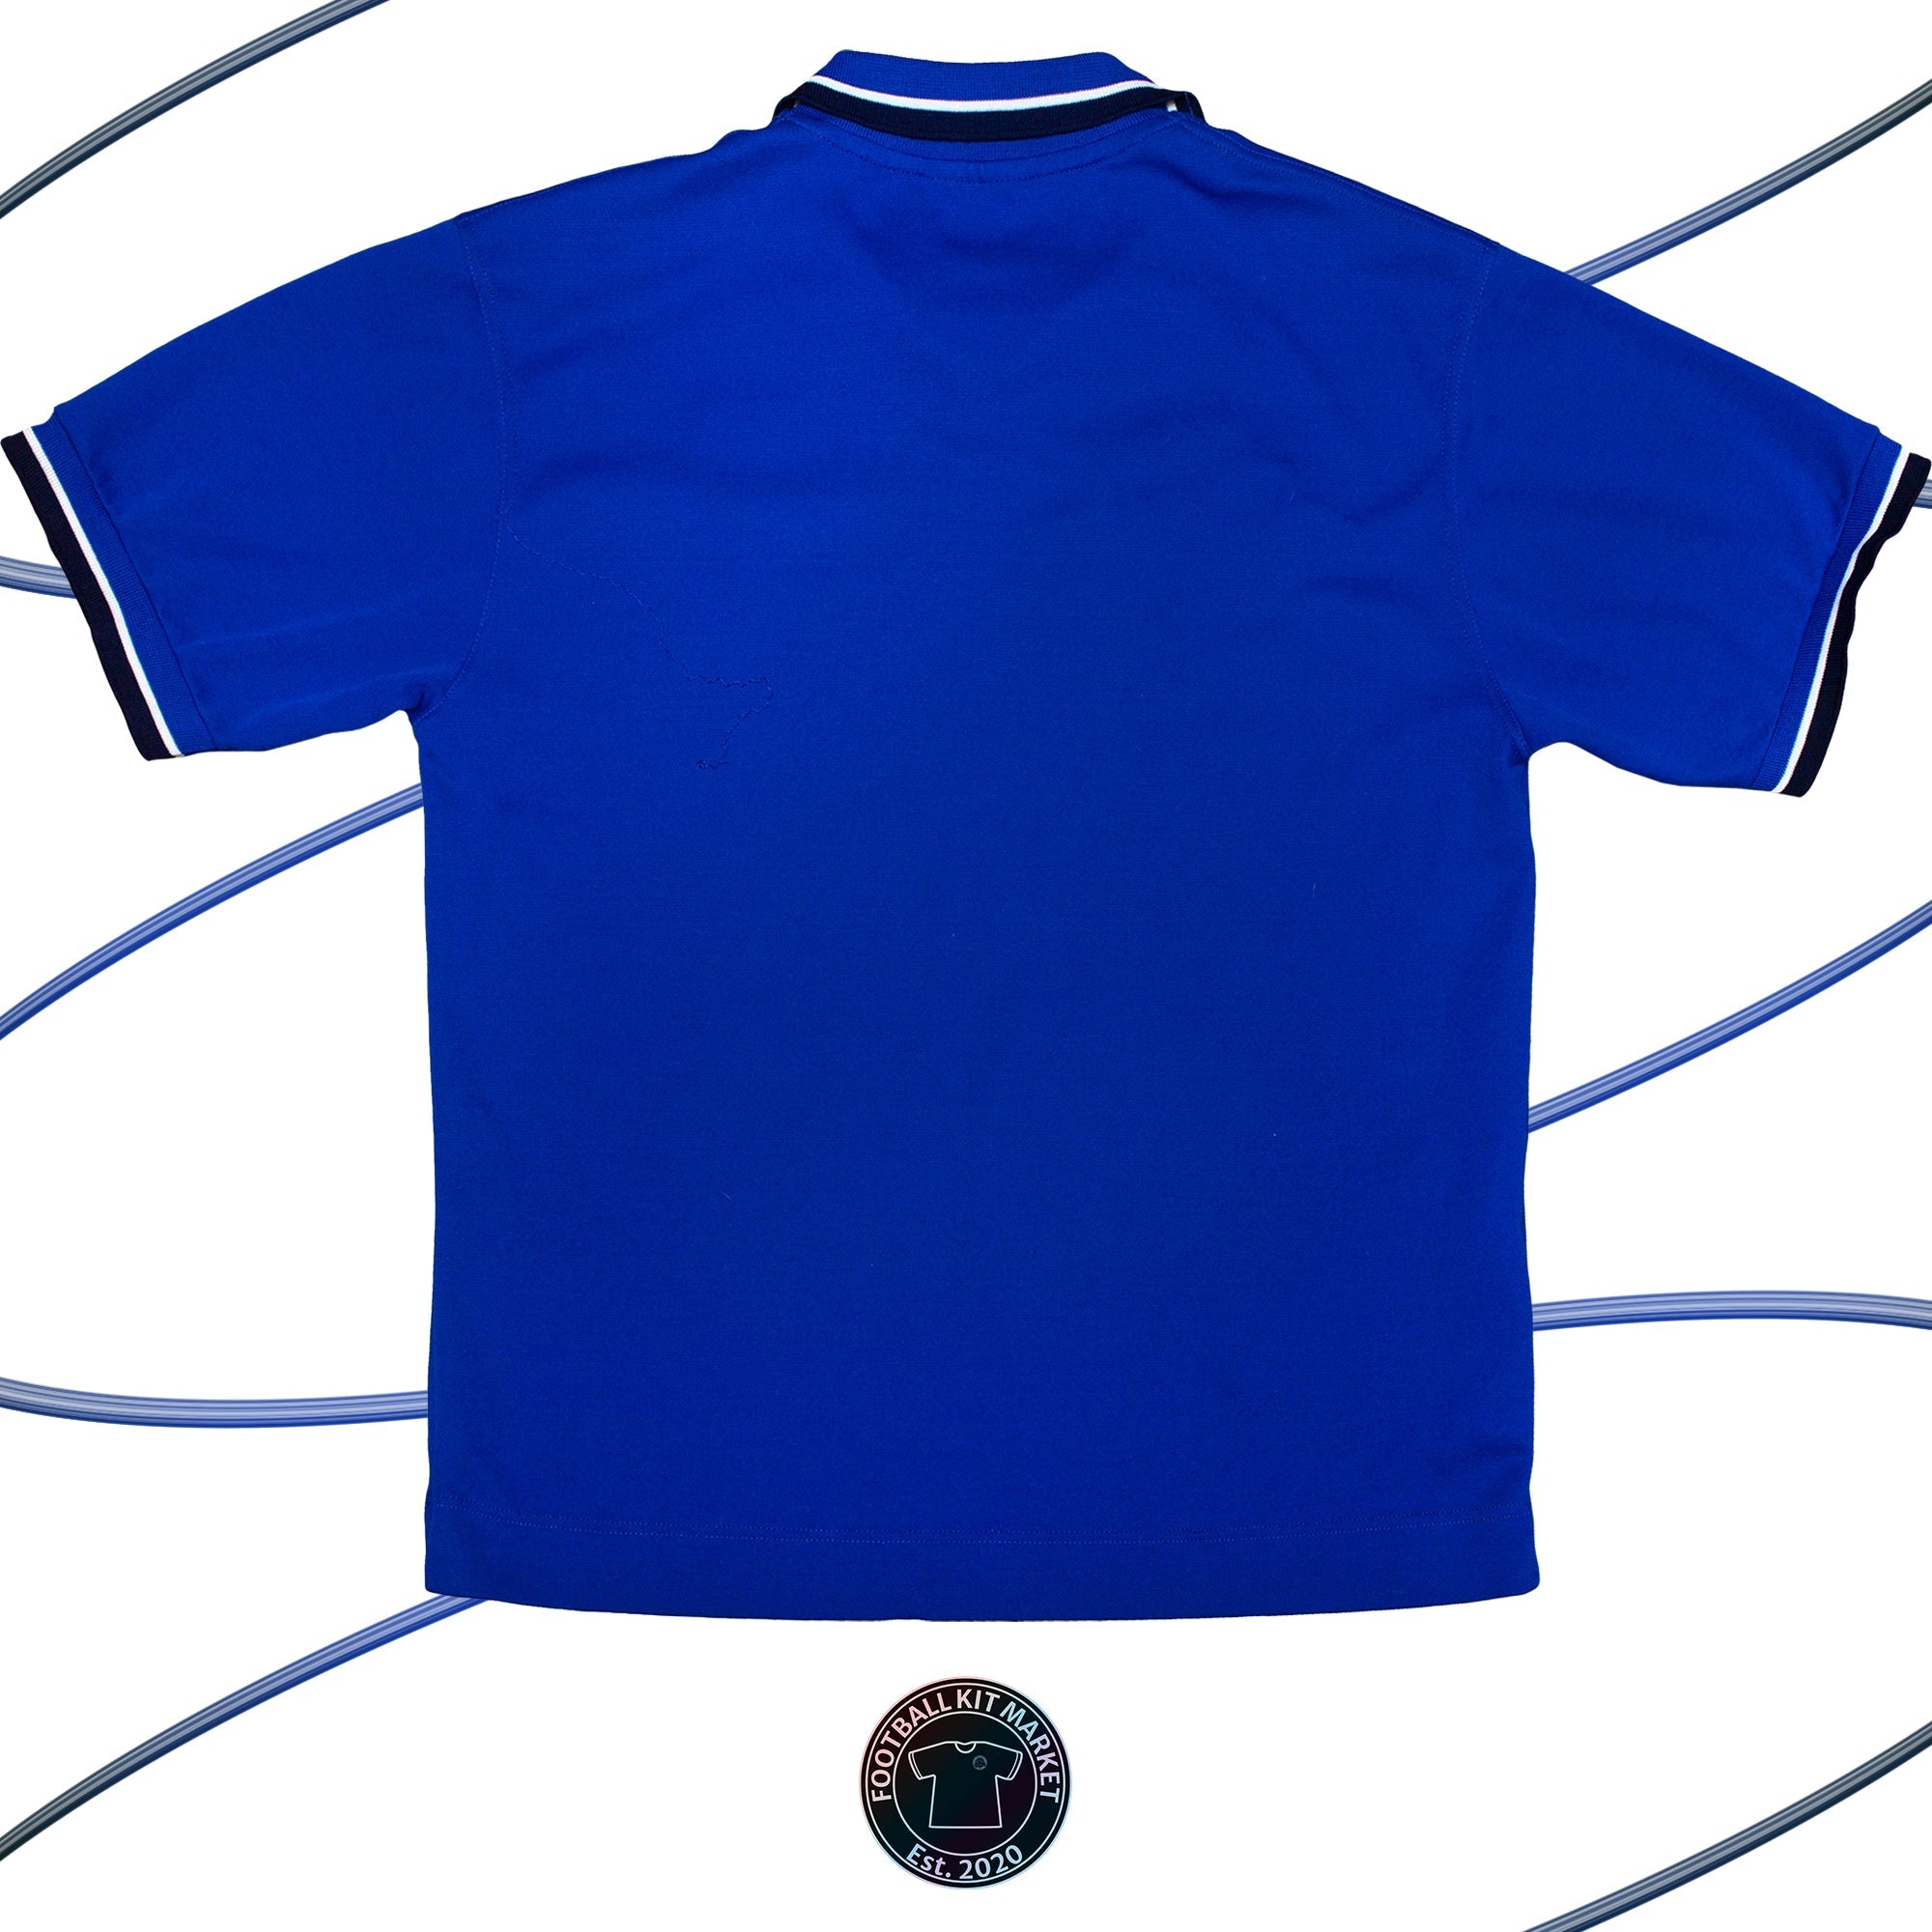 Genuine ITALY Polo (1998-2000) - KAPPA (M) - Product Image from Football Kit Market